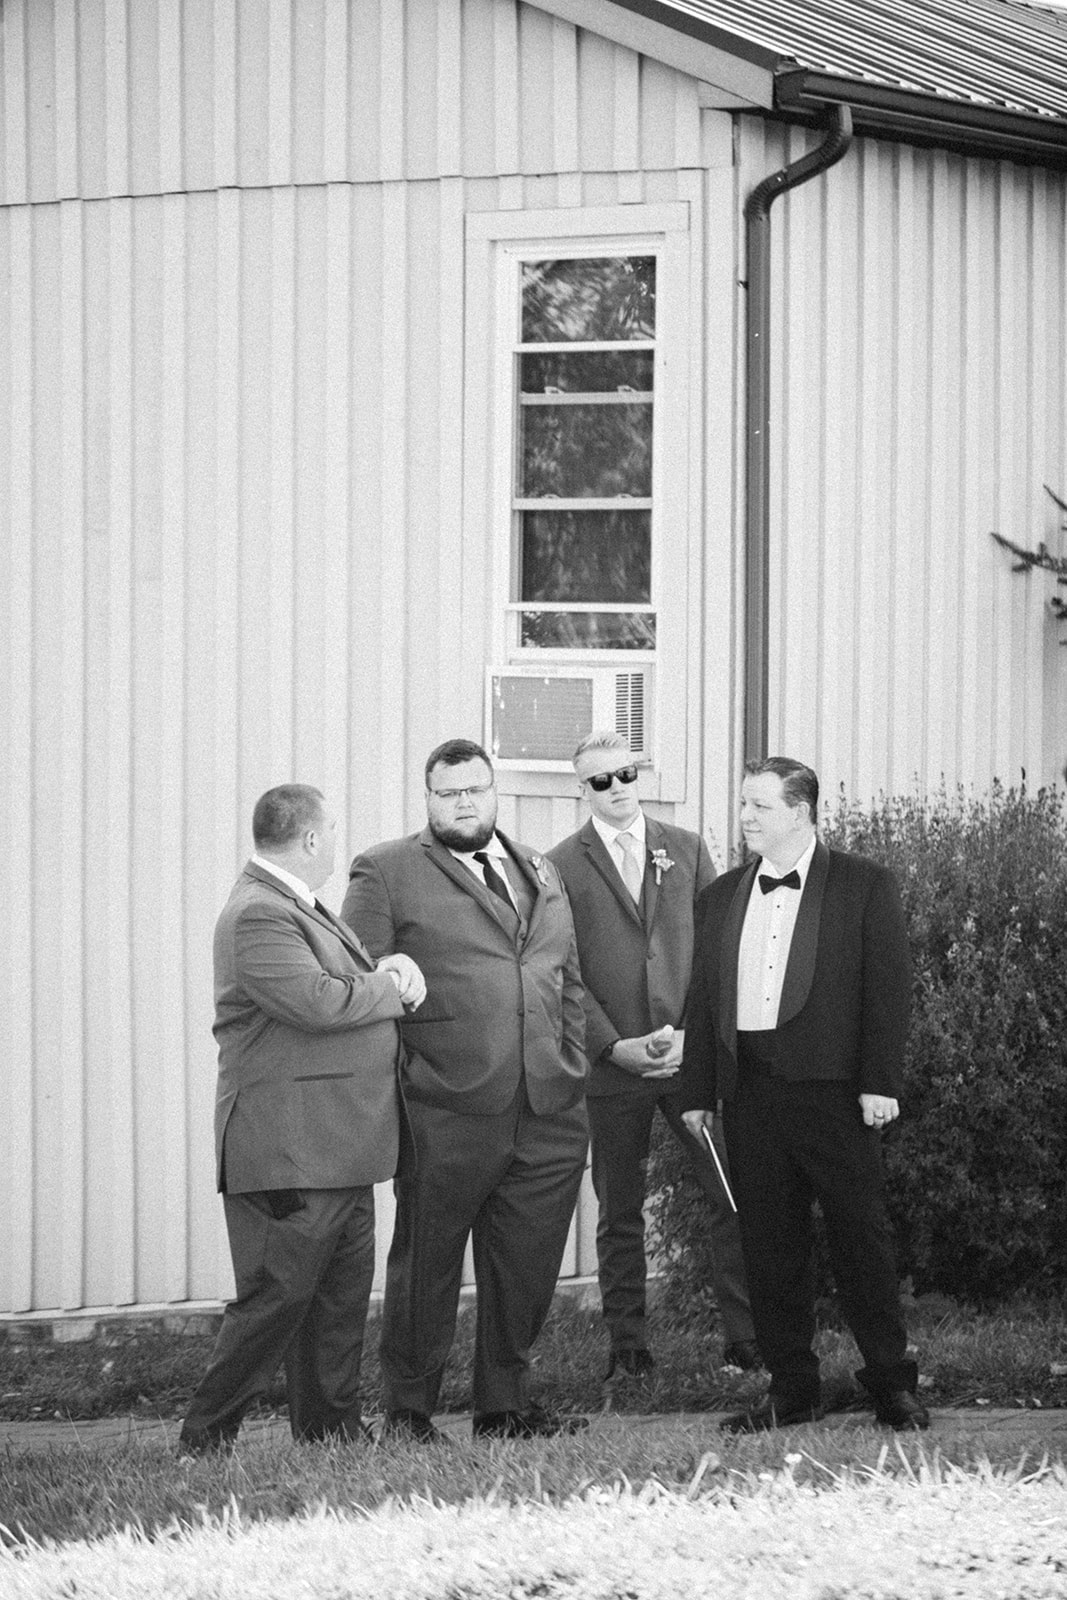 Pennsylvania wedding photographer captures black and white portrait of groomsmen outdoors